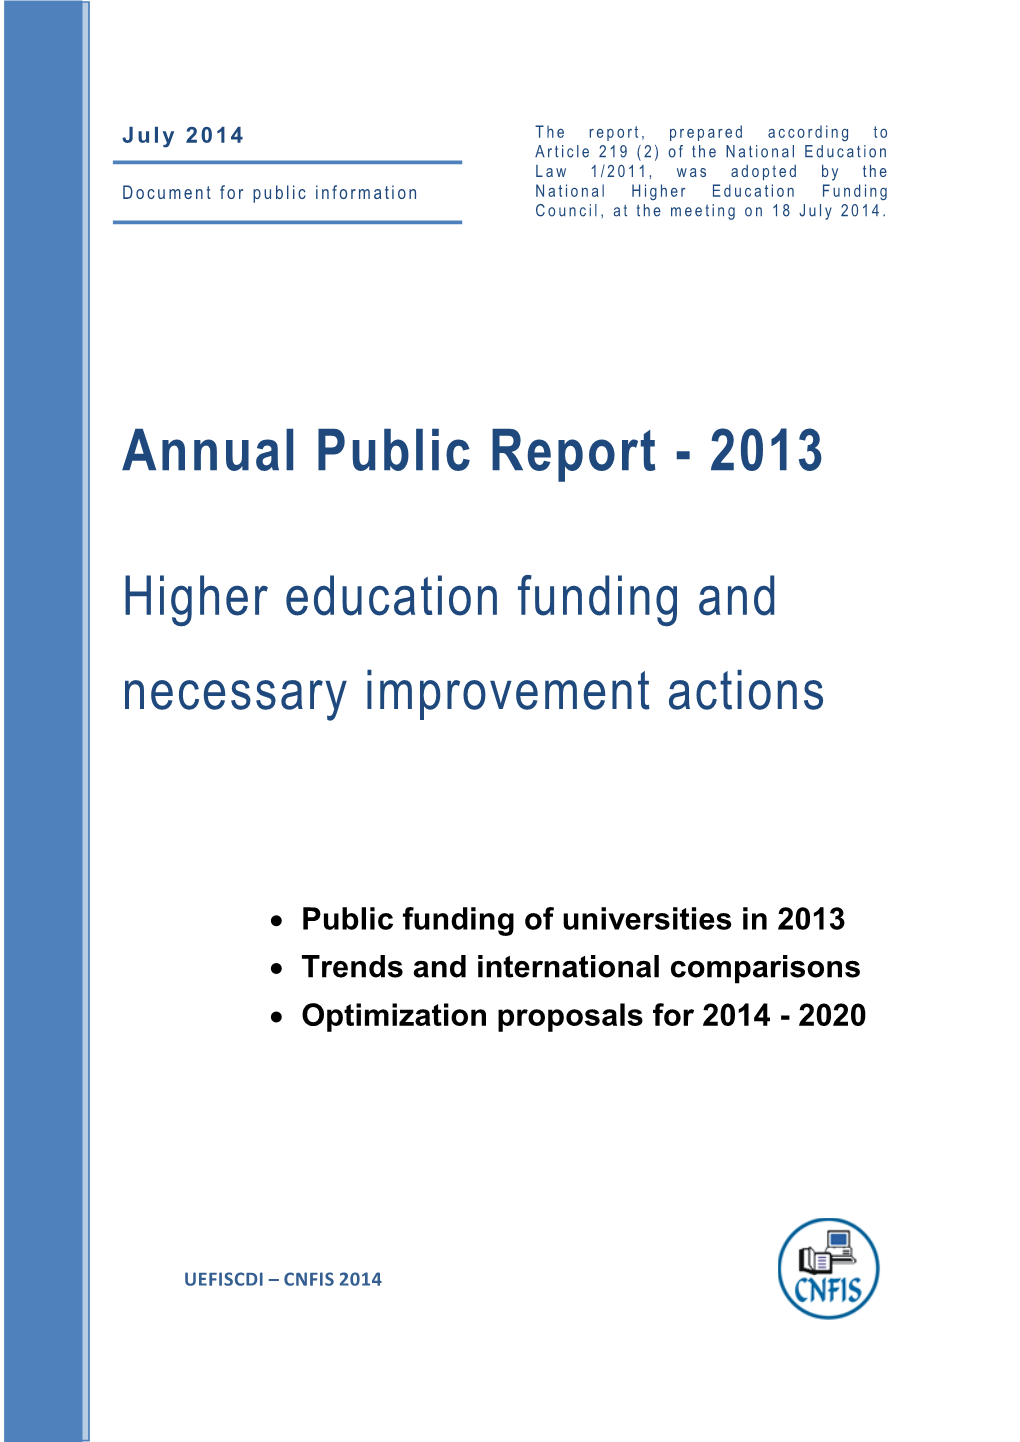 Annual Public Report - 2013